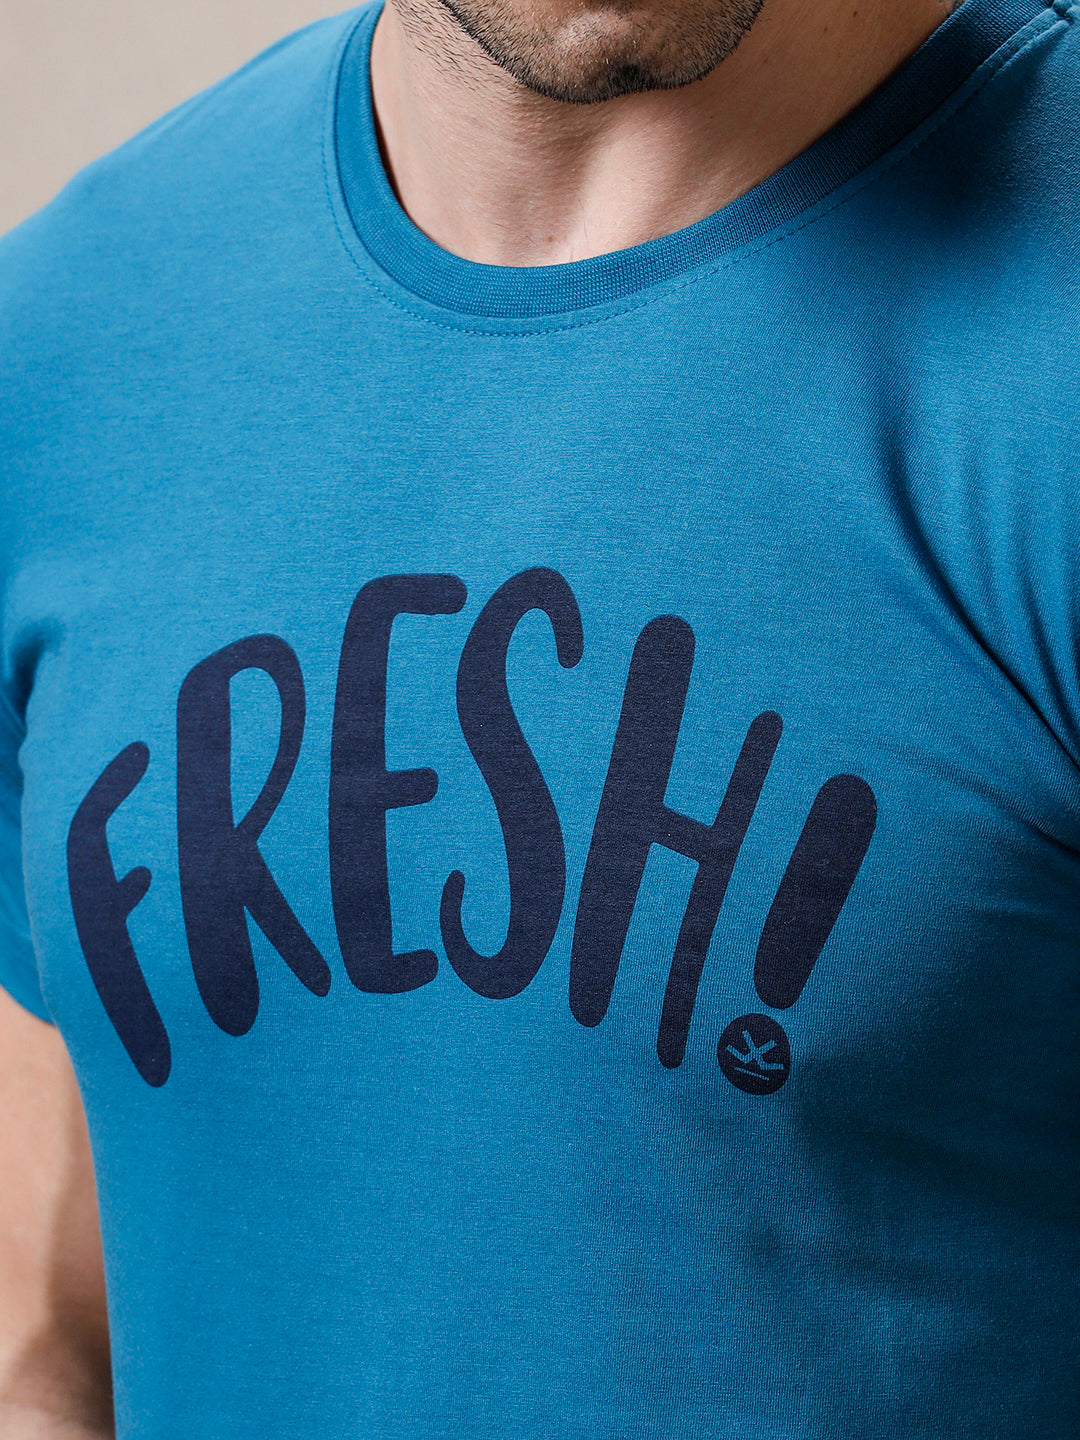 Fresh Print Teal T-Shirt